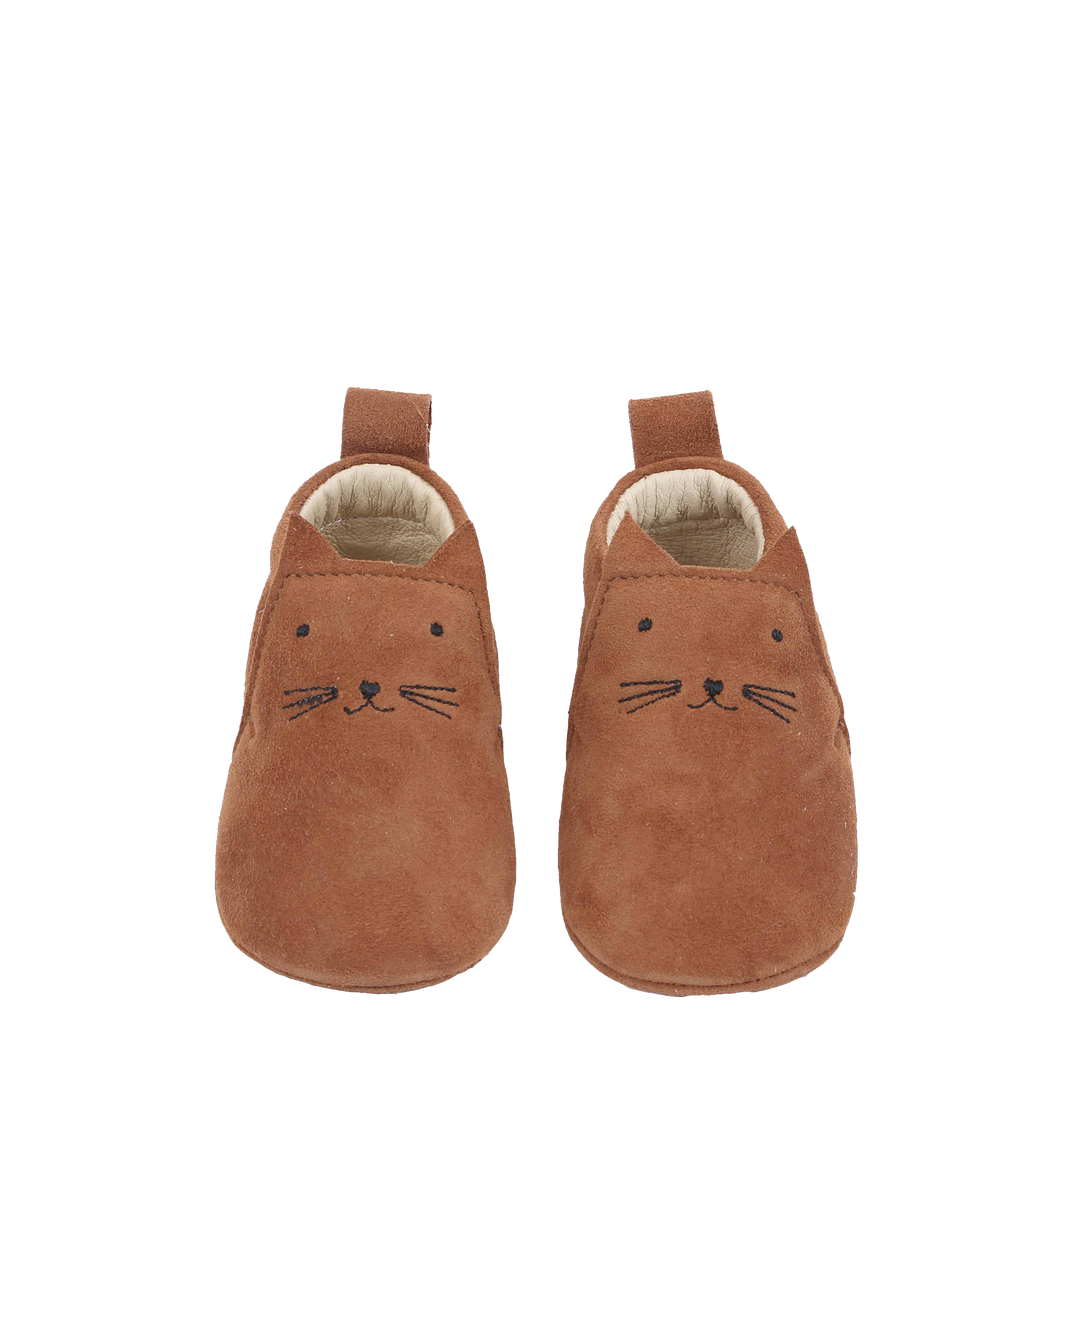 chaussons bebe chat en cuir camel